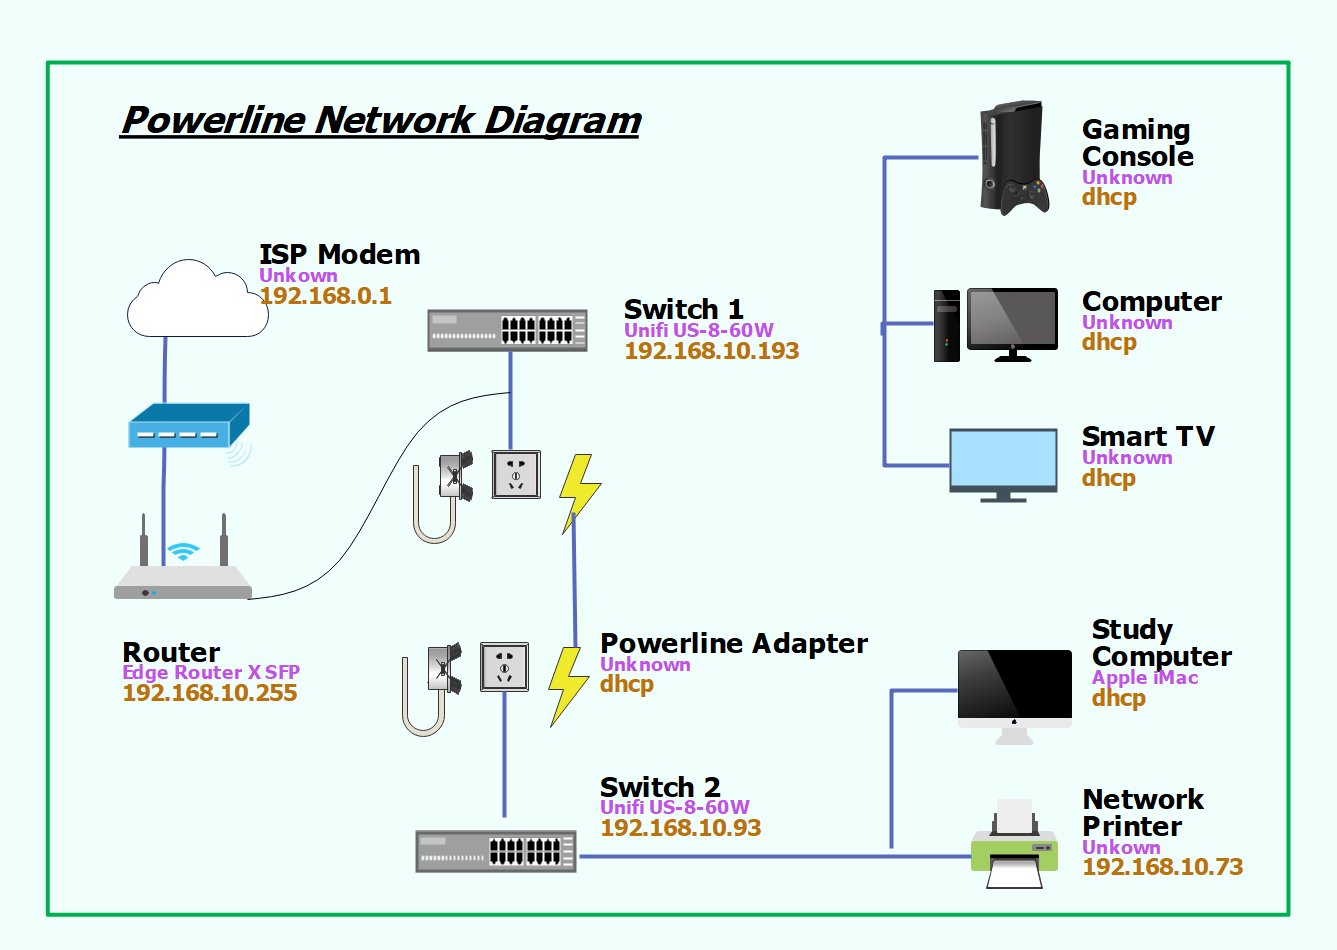 Powerline Network Diagram Template